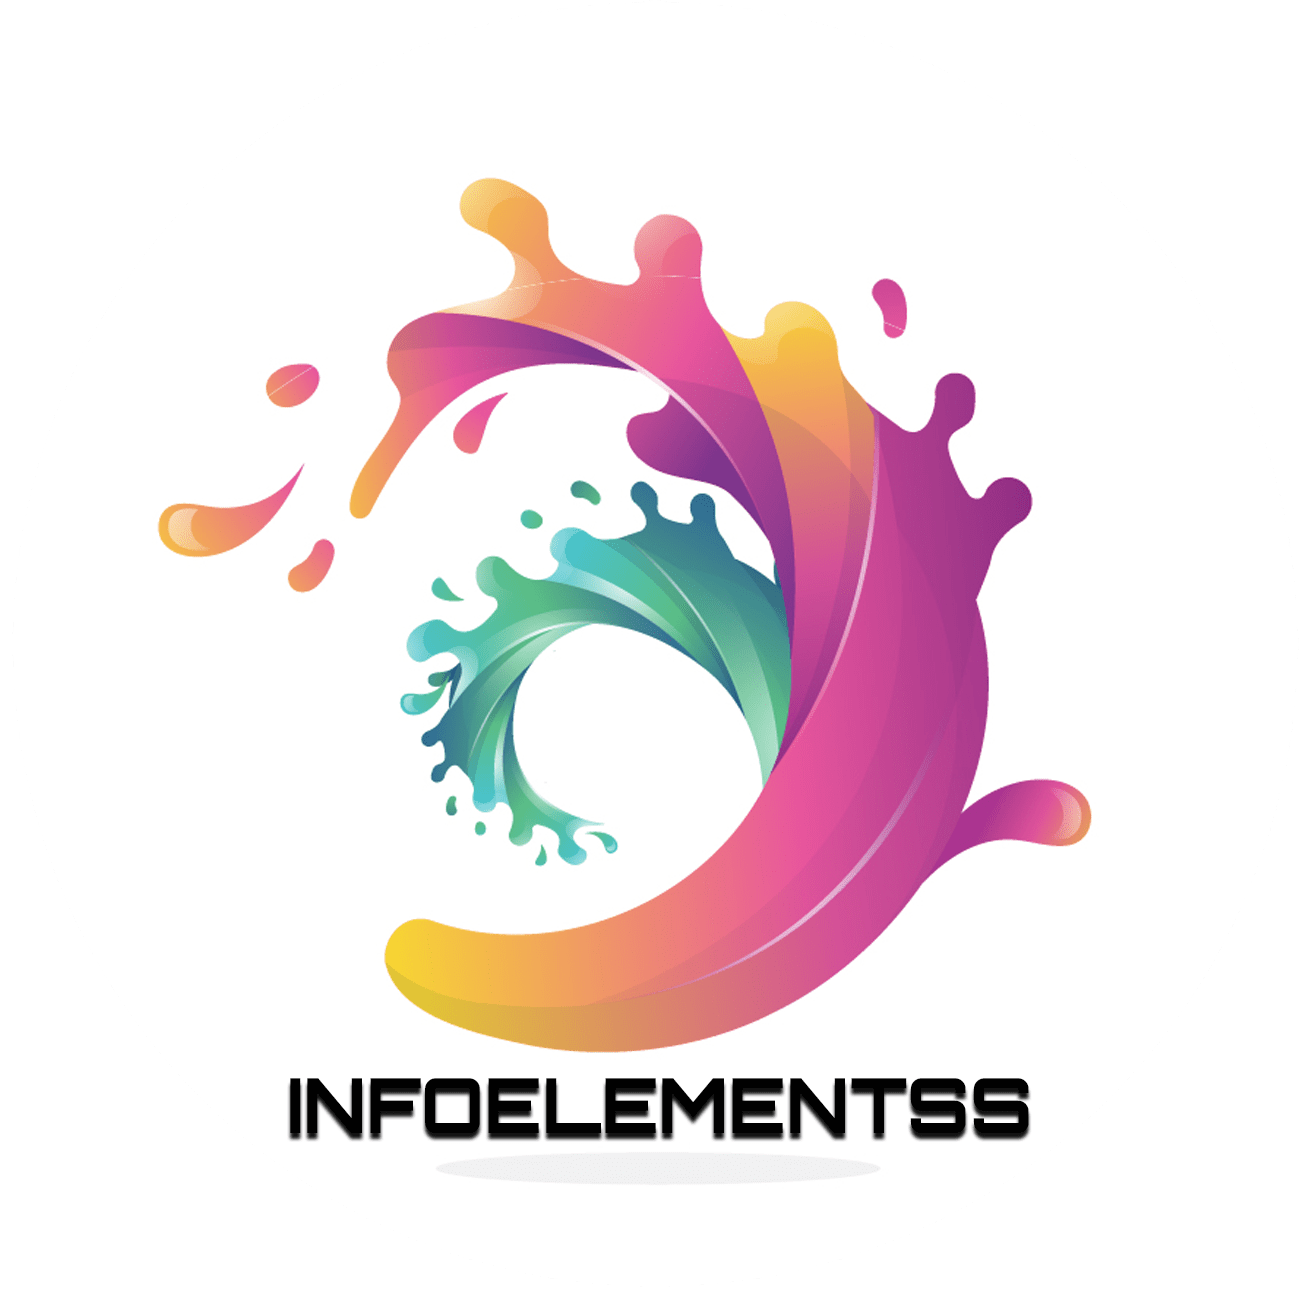 InfoElements